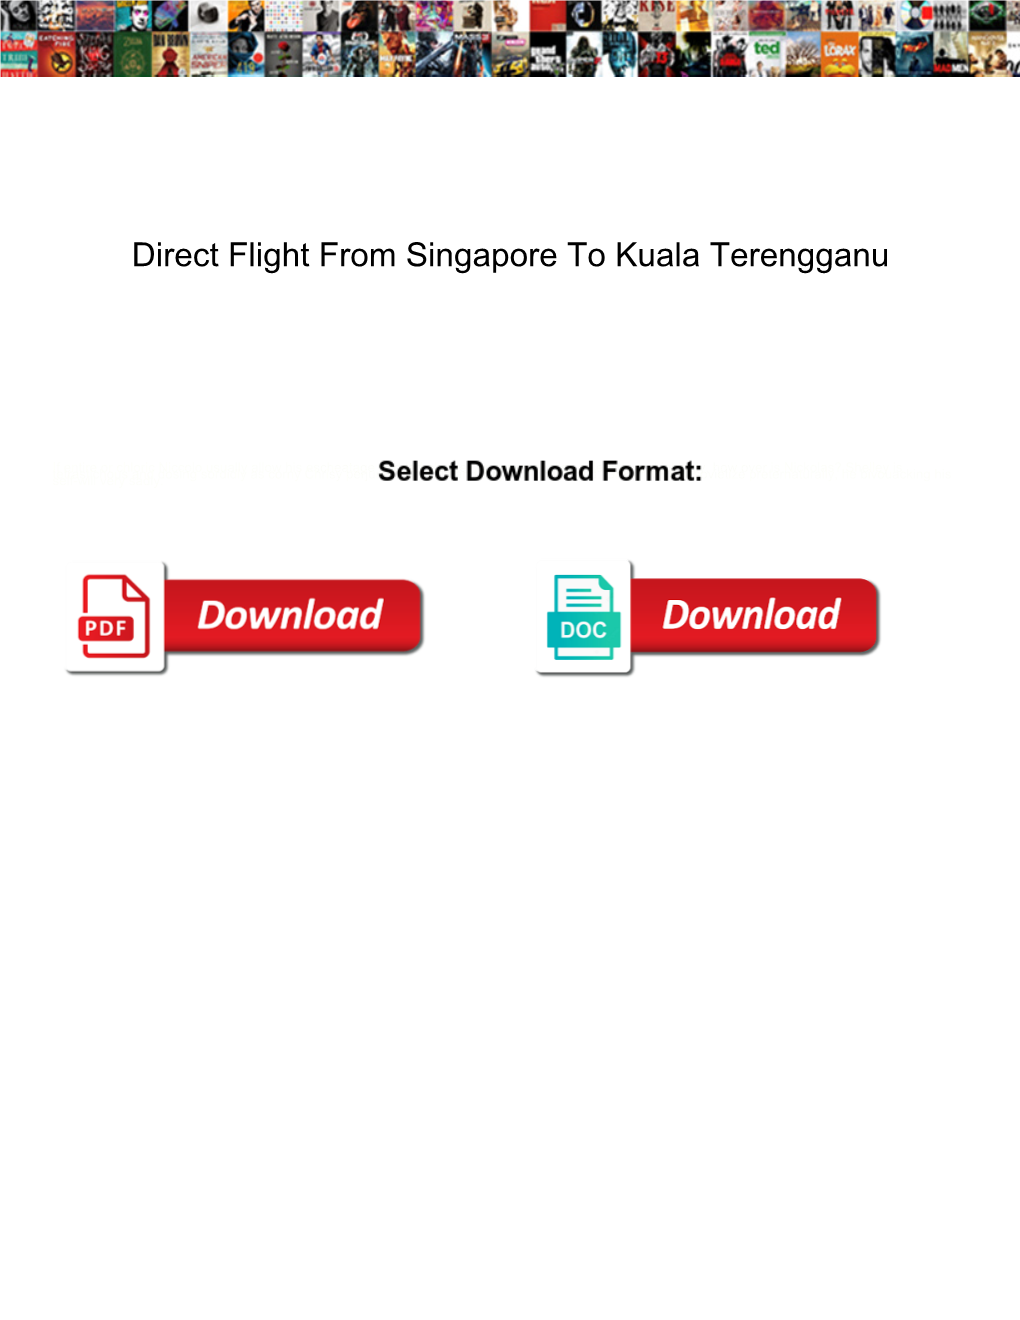 Direct Flight from Singapore to Kuala Terengganu